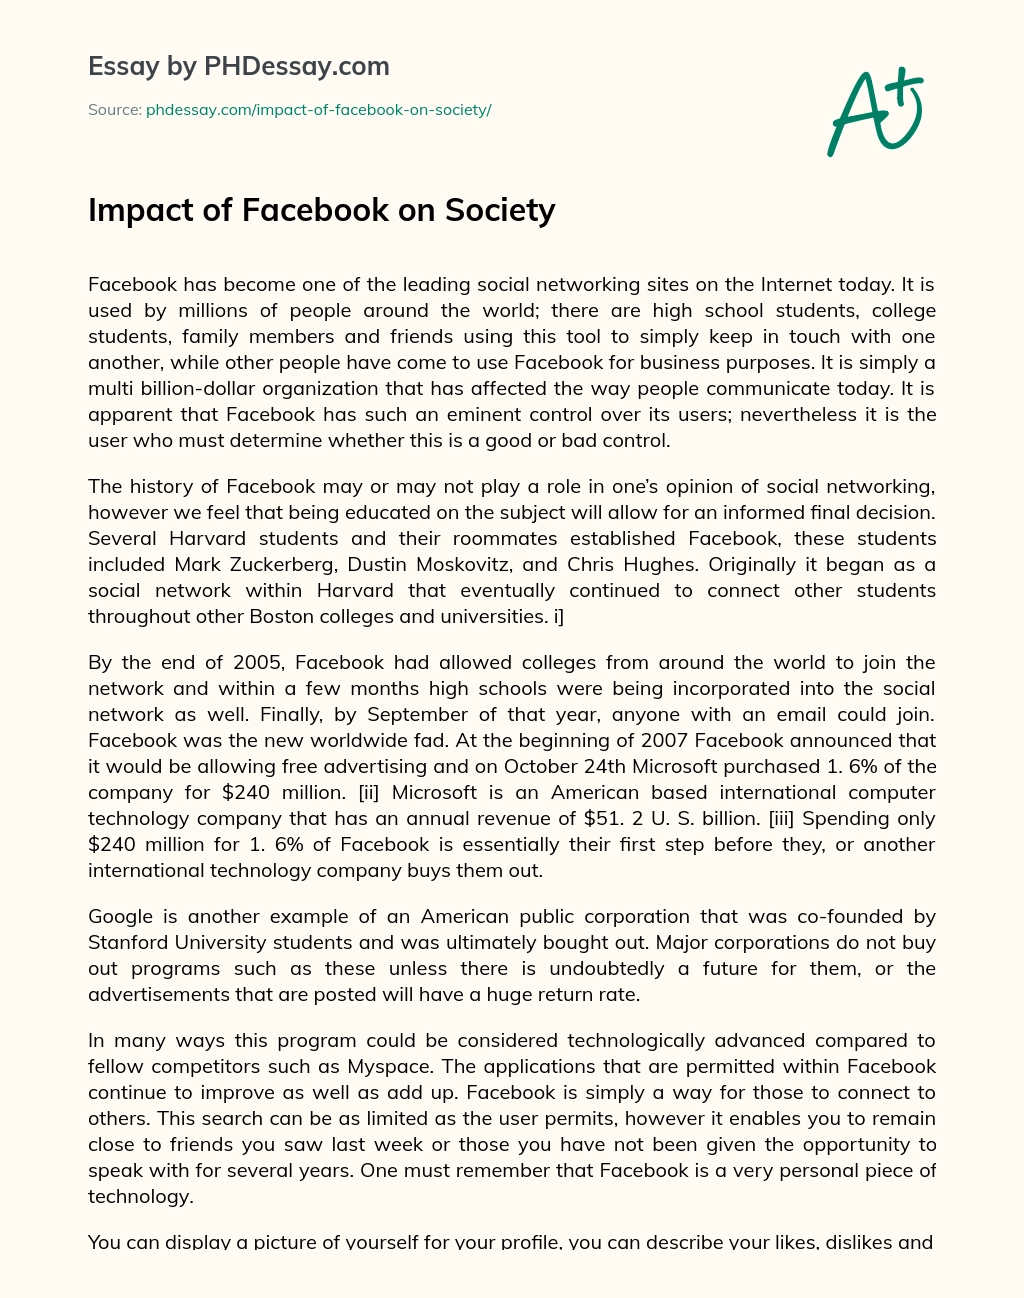 Impact of Facebook on Society essay